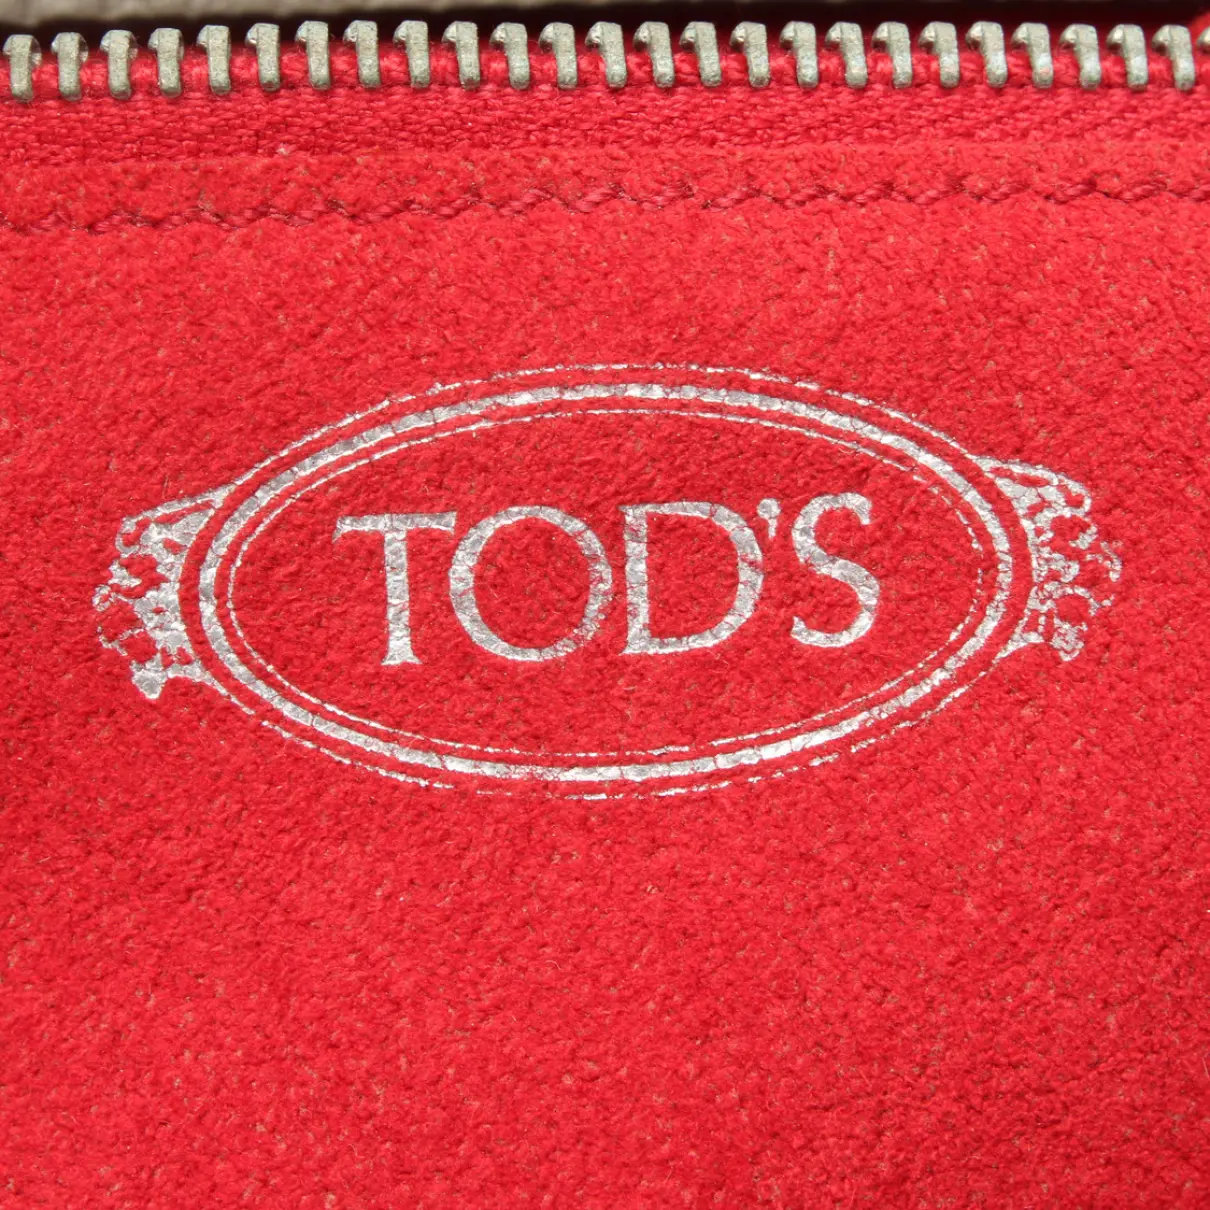 Leather crossbody bag Tod's